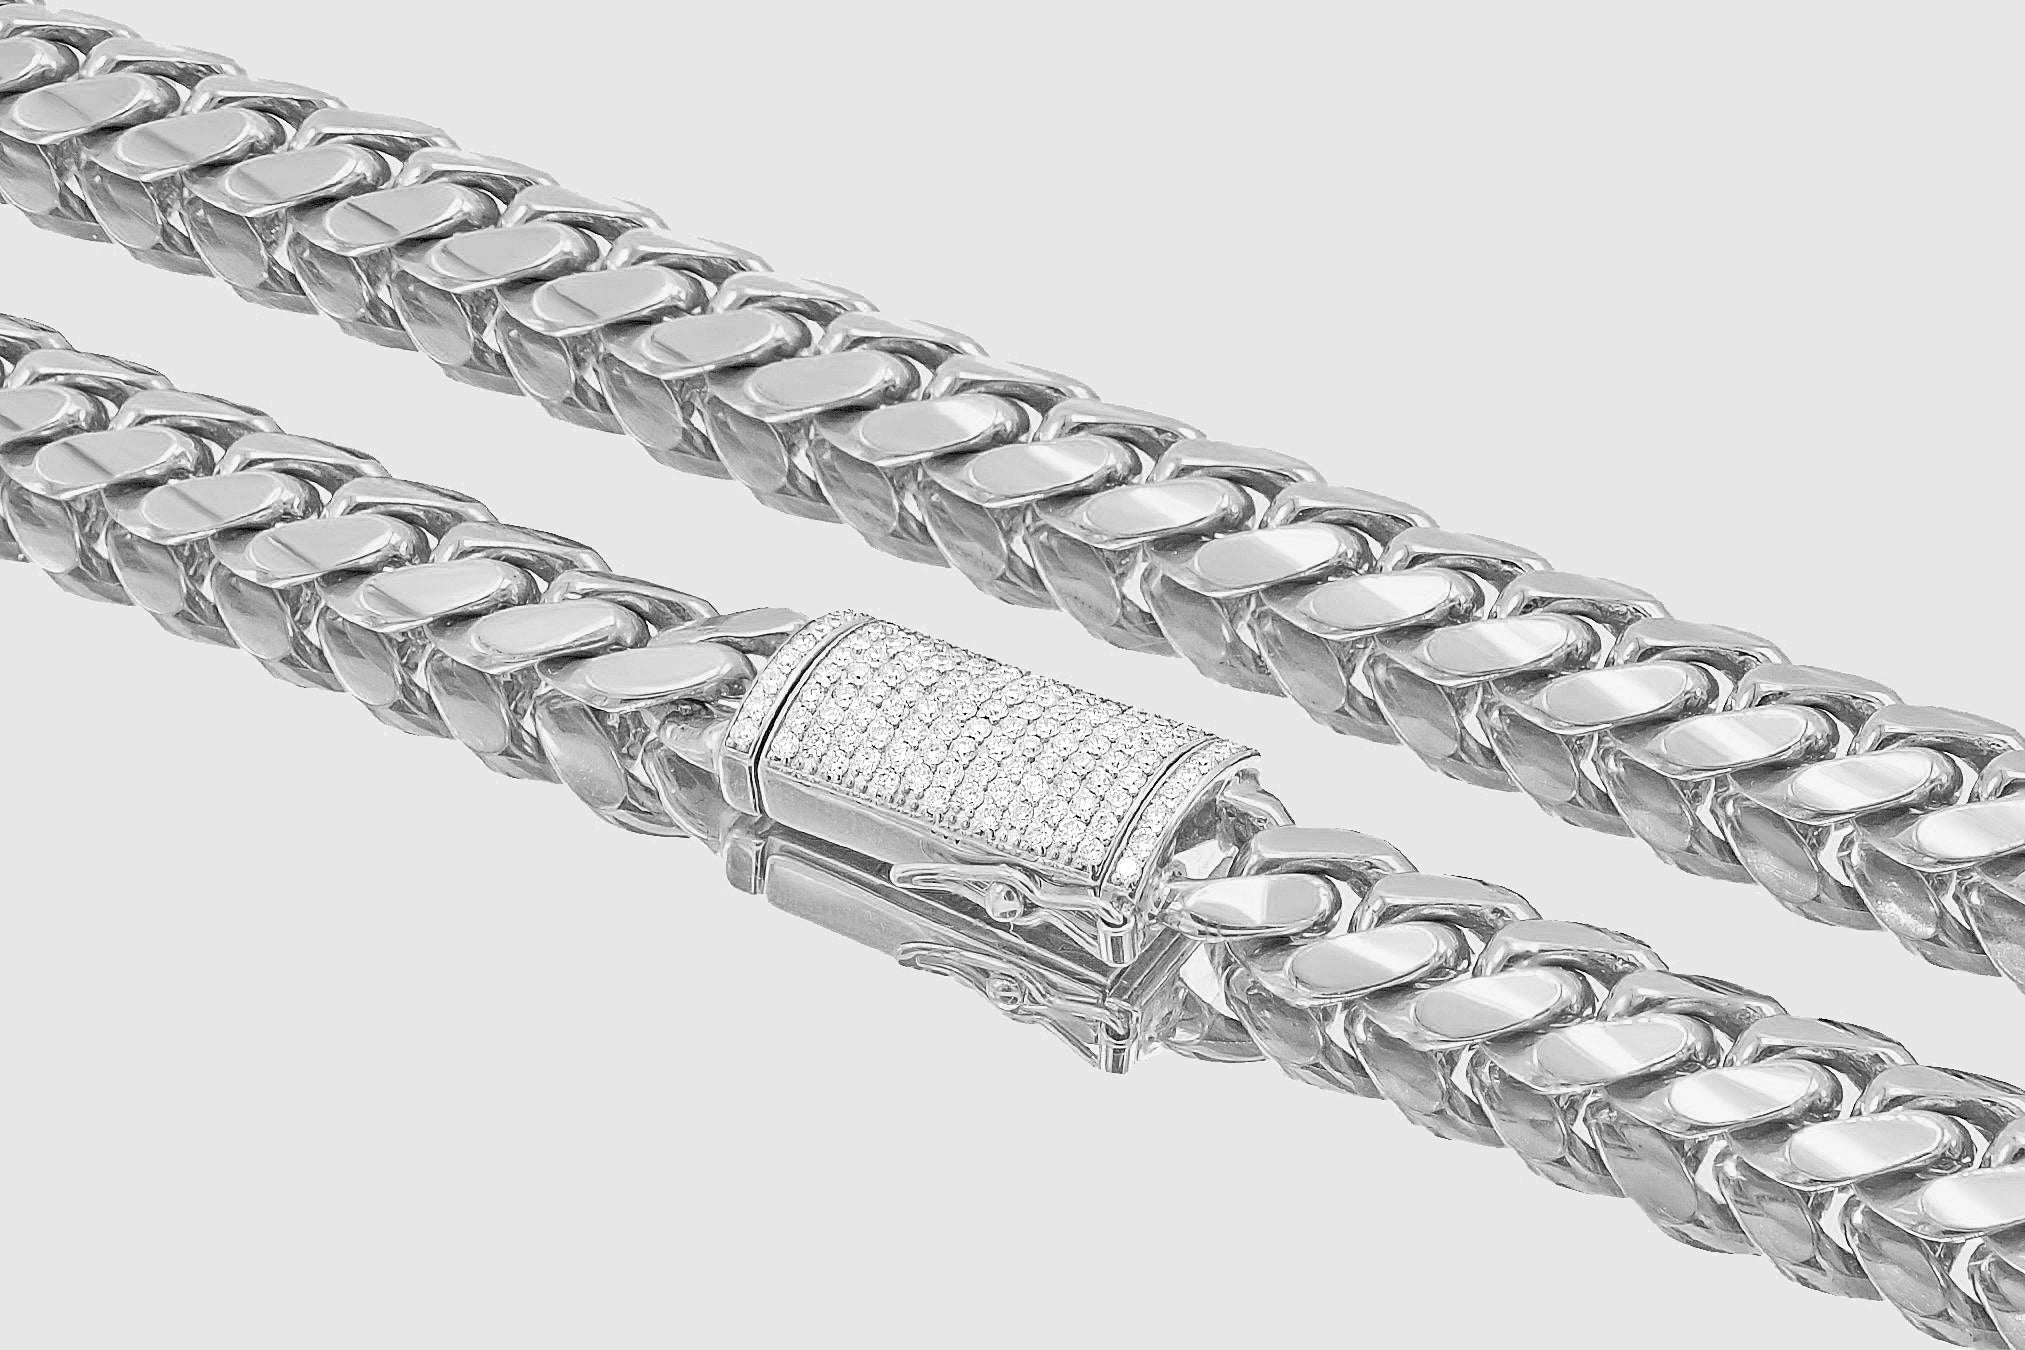 18 Karat Diamond Padlock Pendant with Handmade Curb Chain Necklace